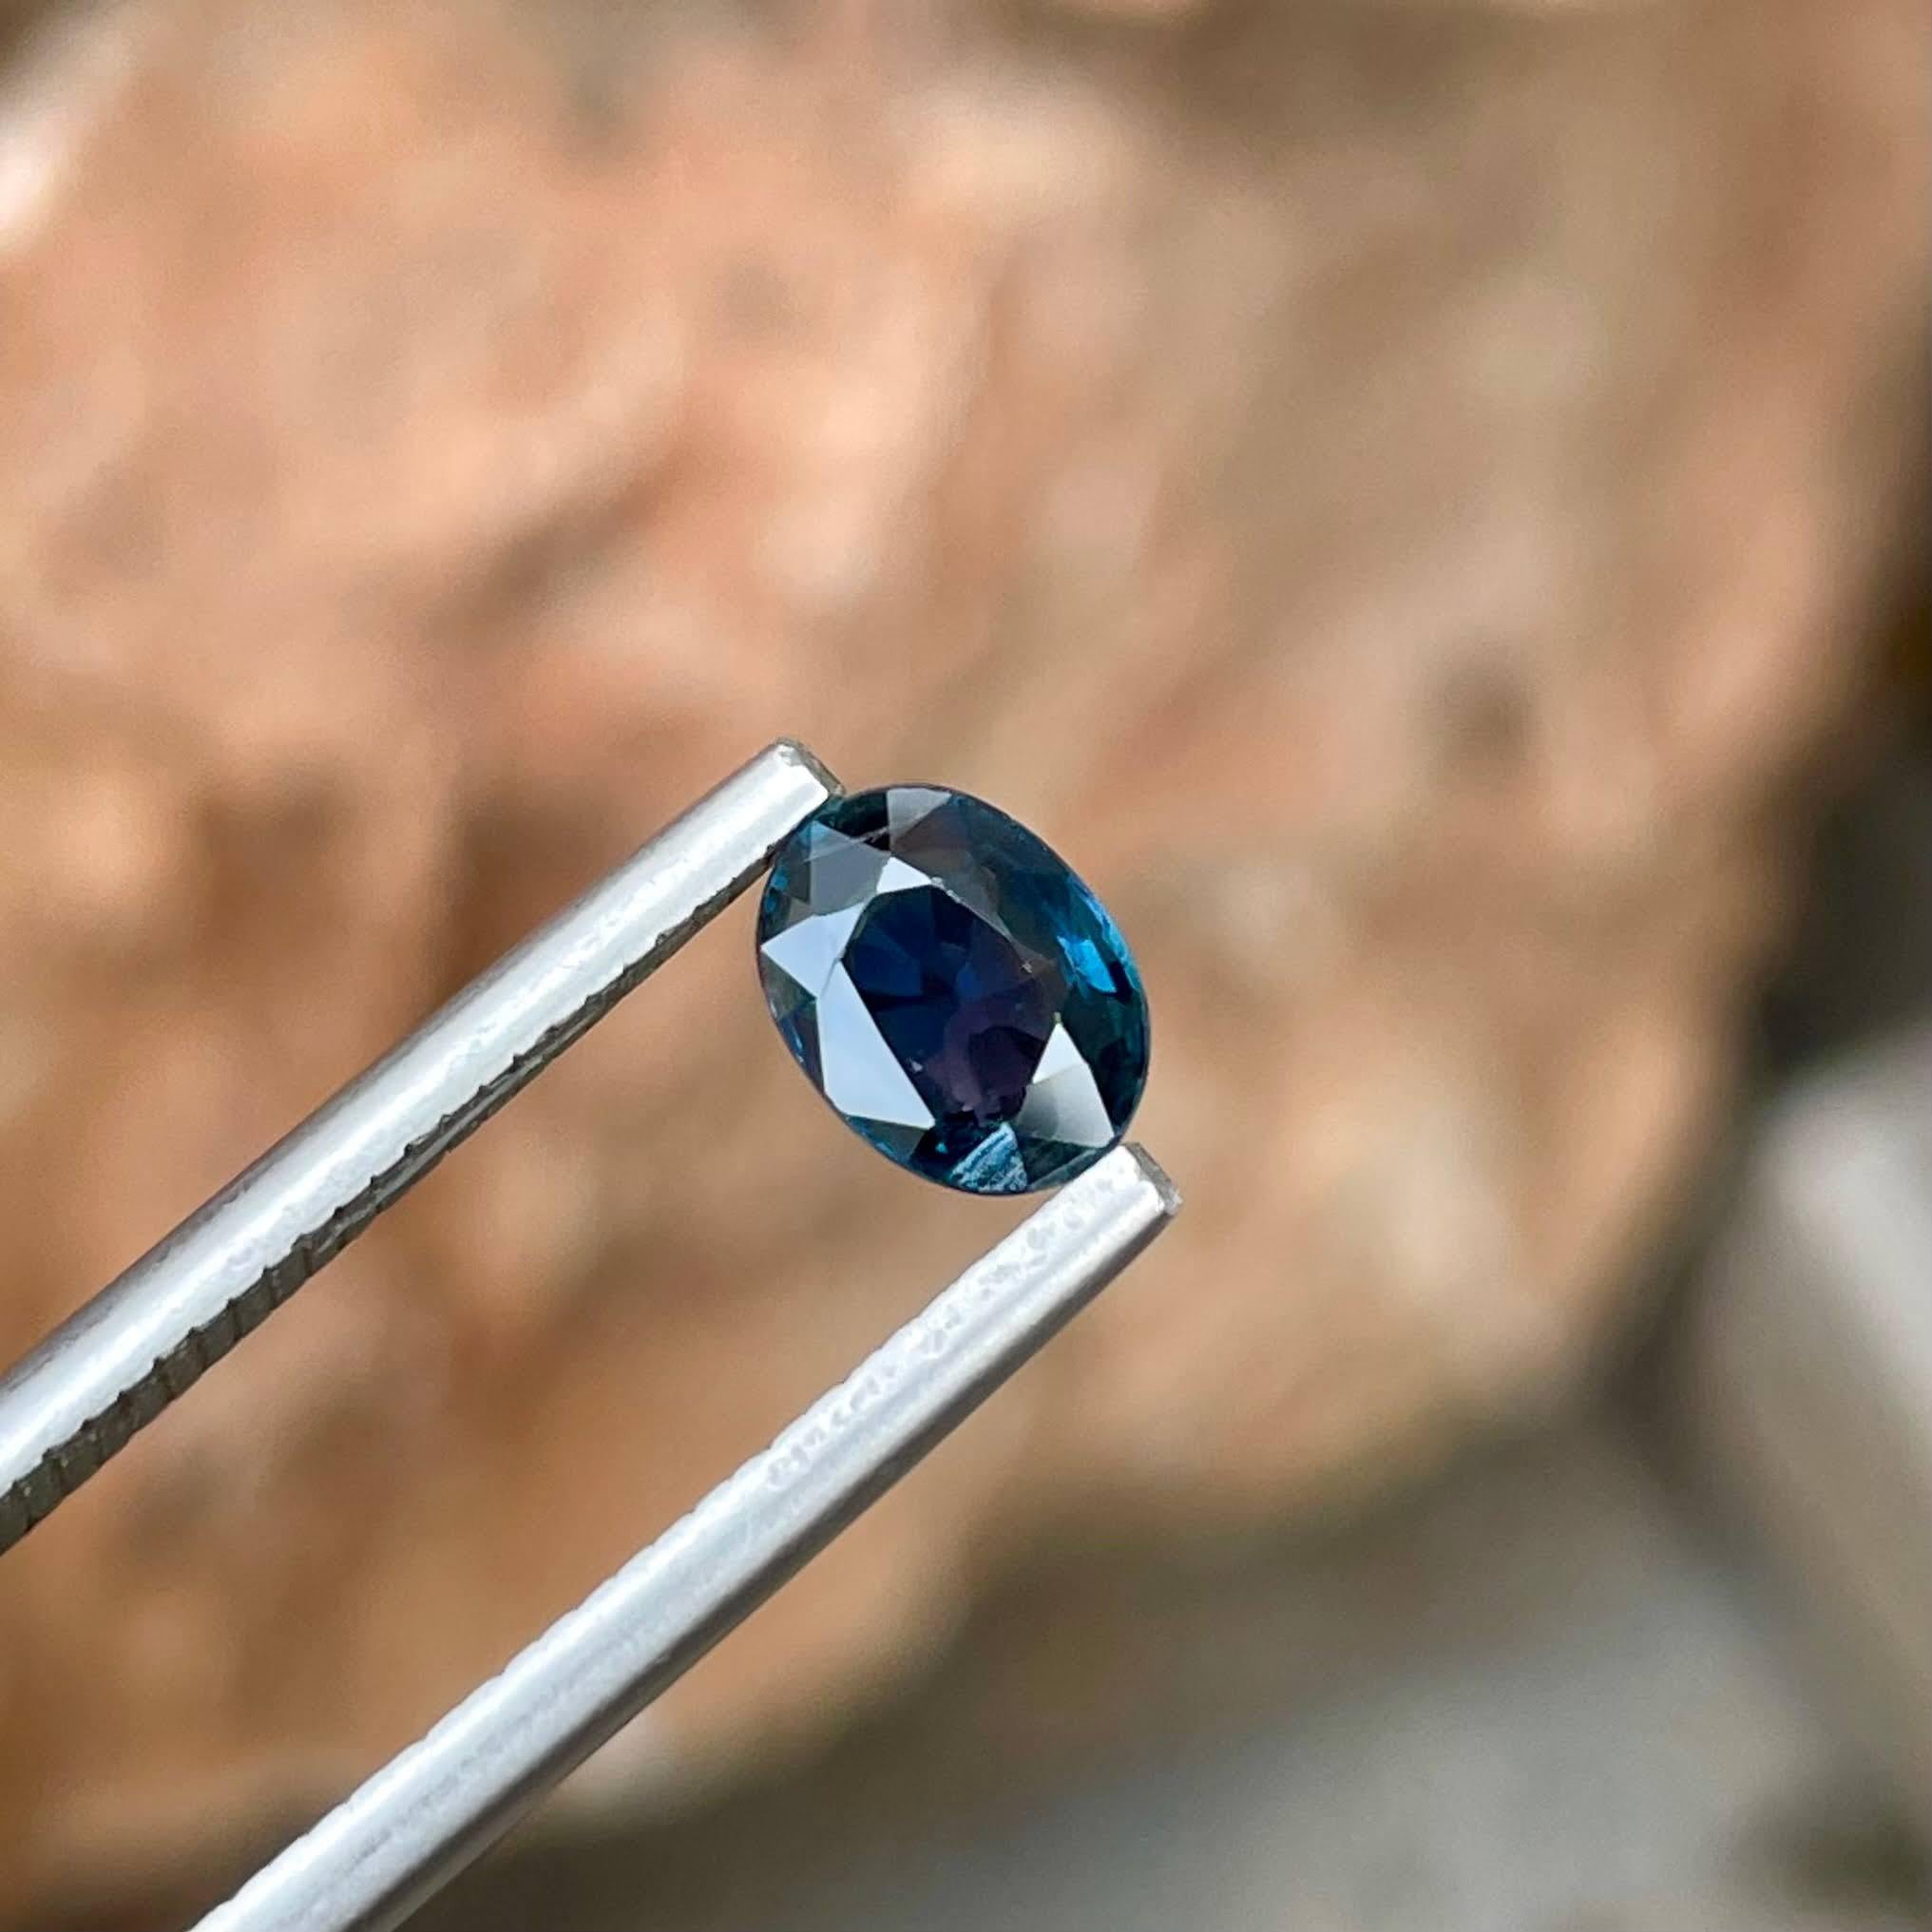 Modern 0.88 Carats Loose Deep Blue Sapphire Stone Oval Cut Madagascar's Gemstone For Sale